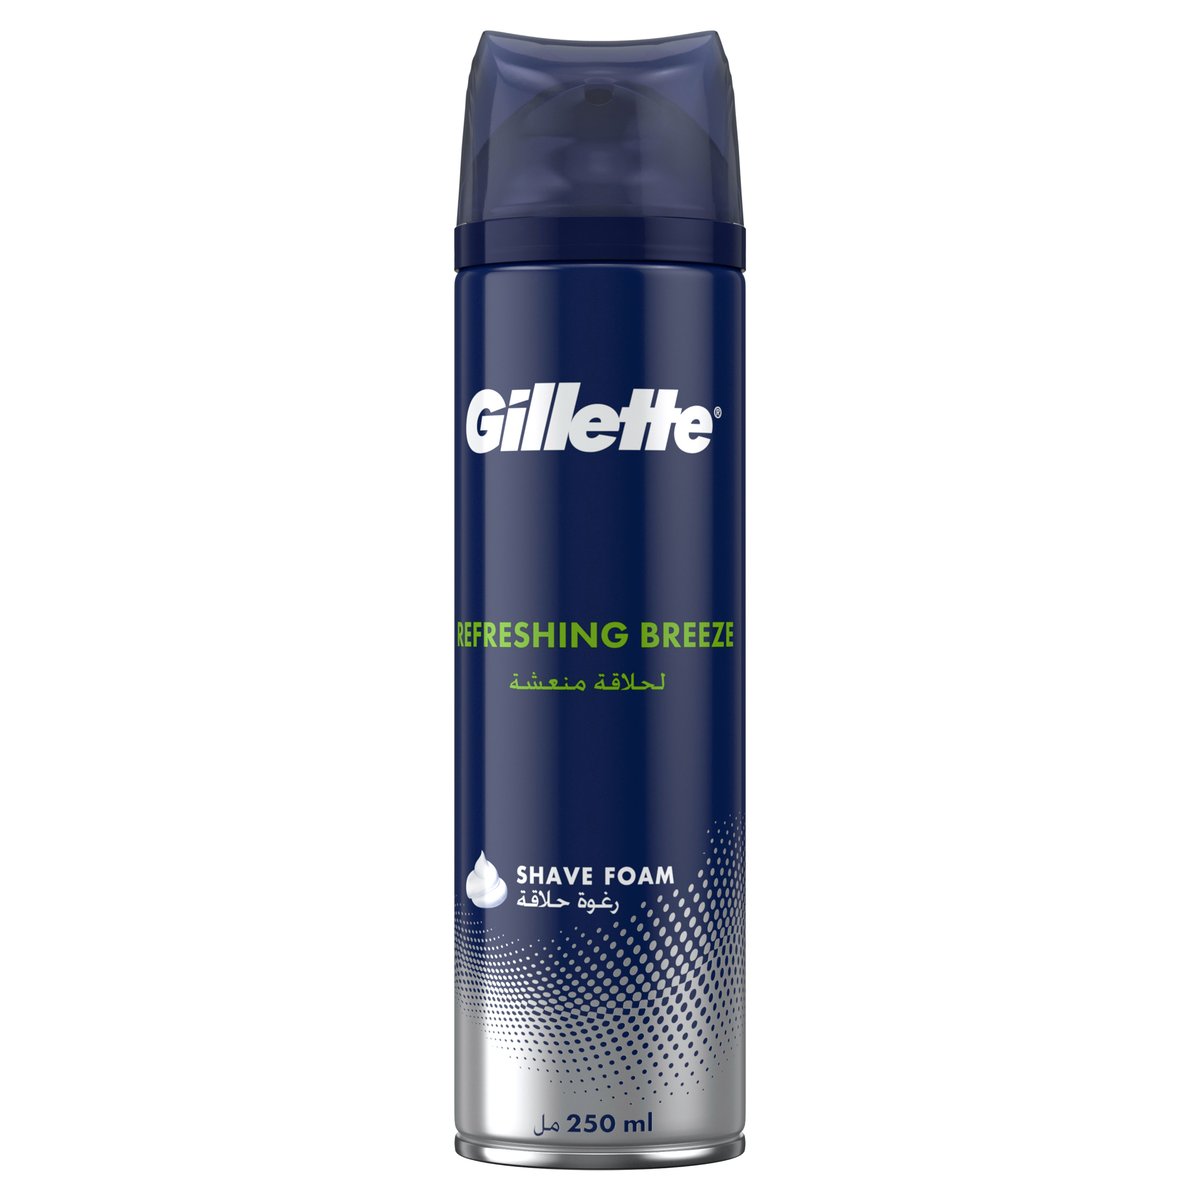 Gillette Shave Foam Refreshing Breeze 250 ml